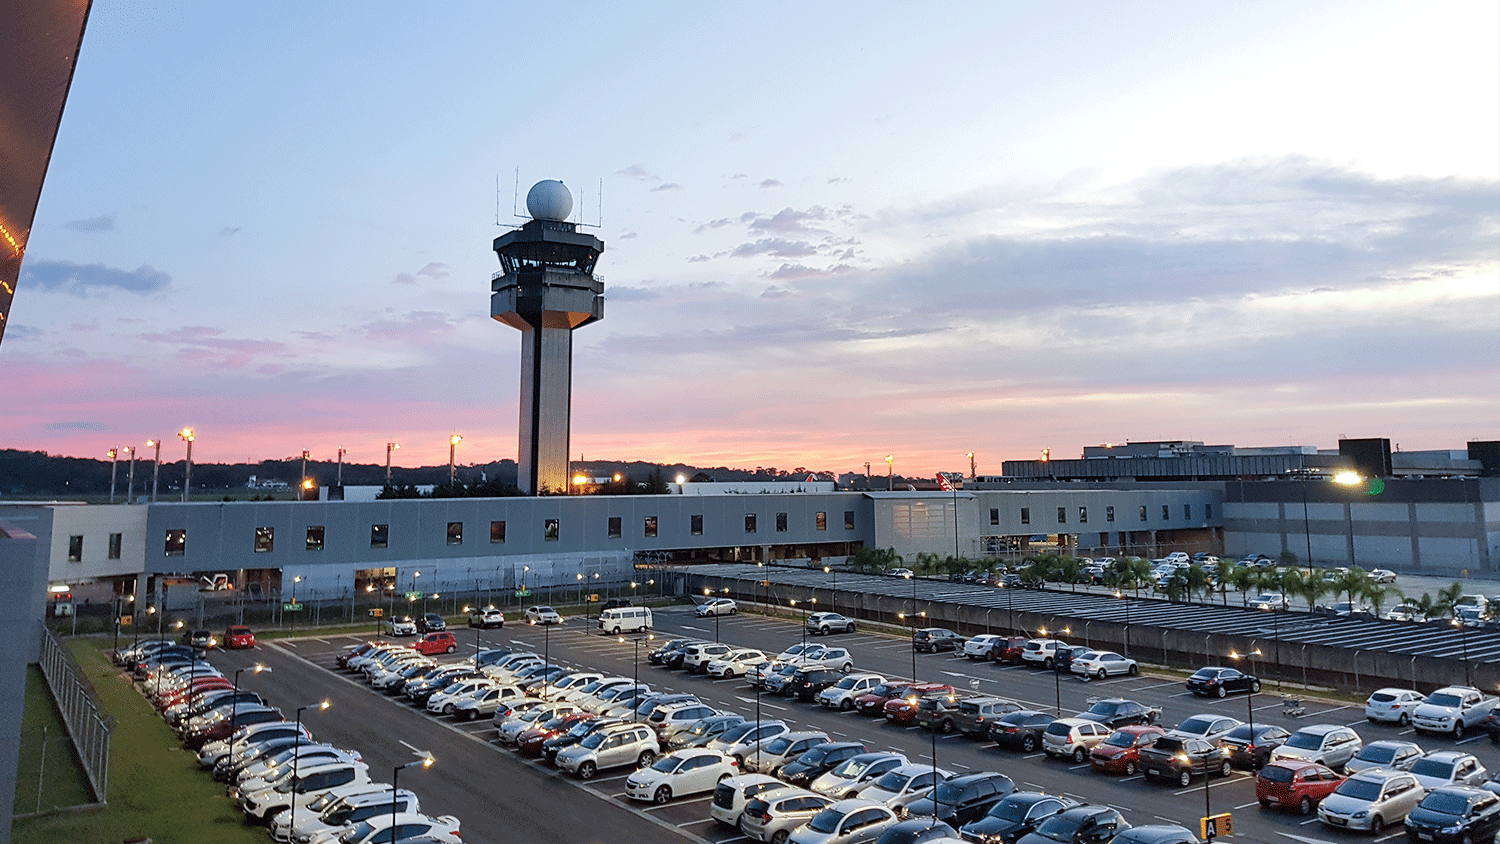 Airport parking lot at dusk